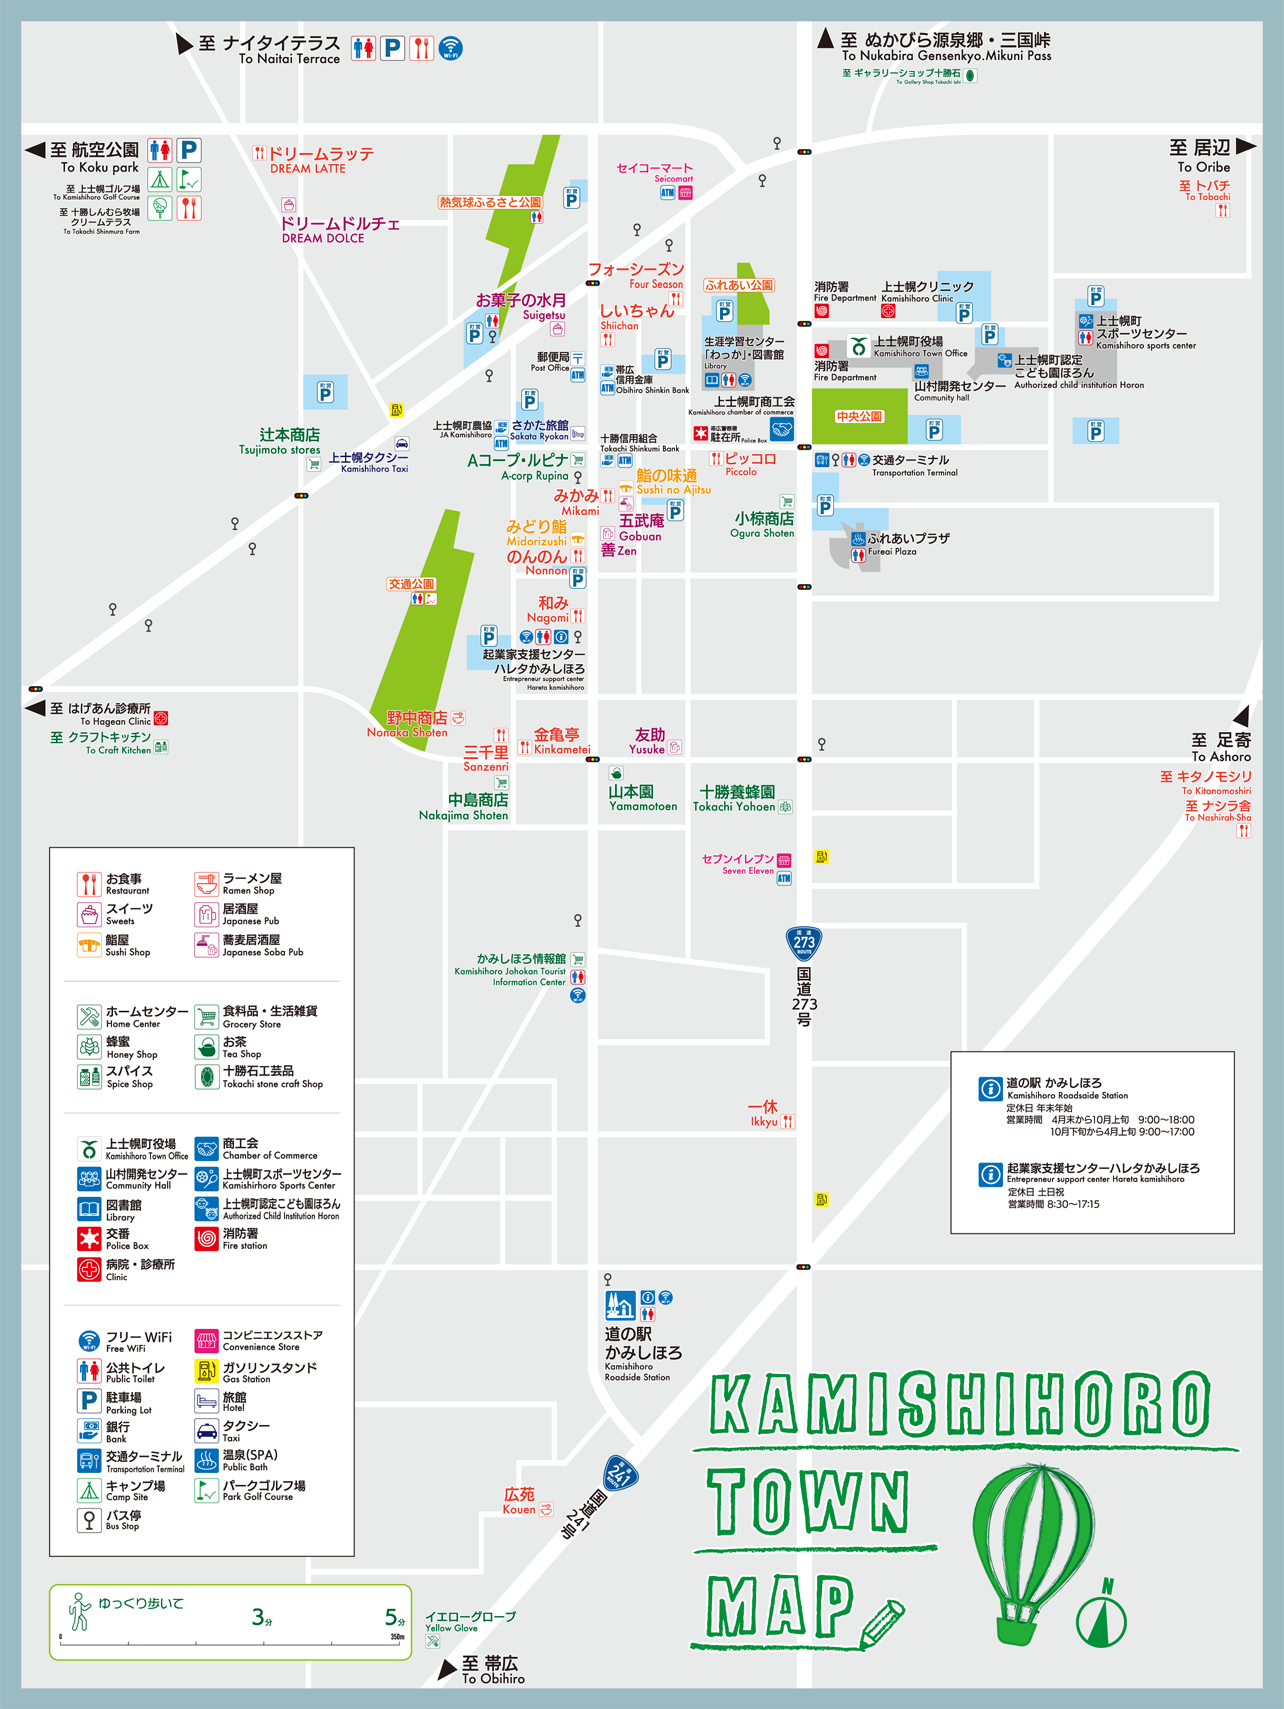 KAMISHIHORO TOWN MAP